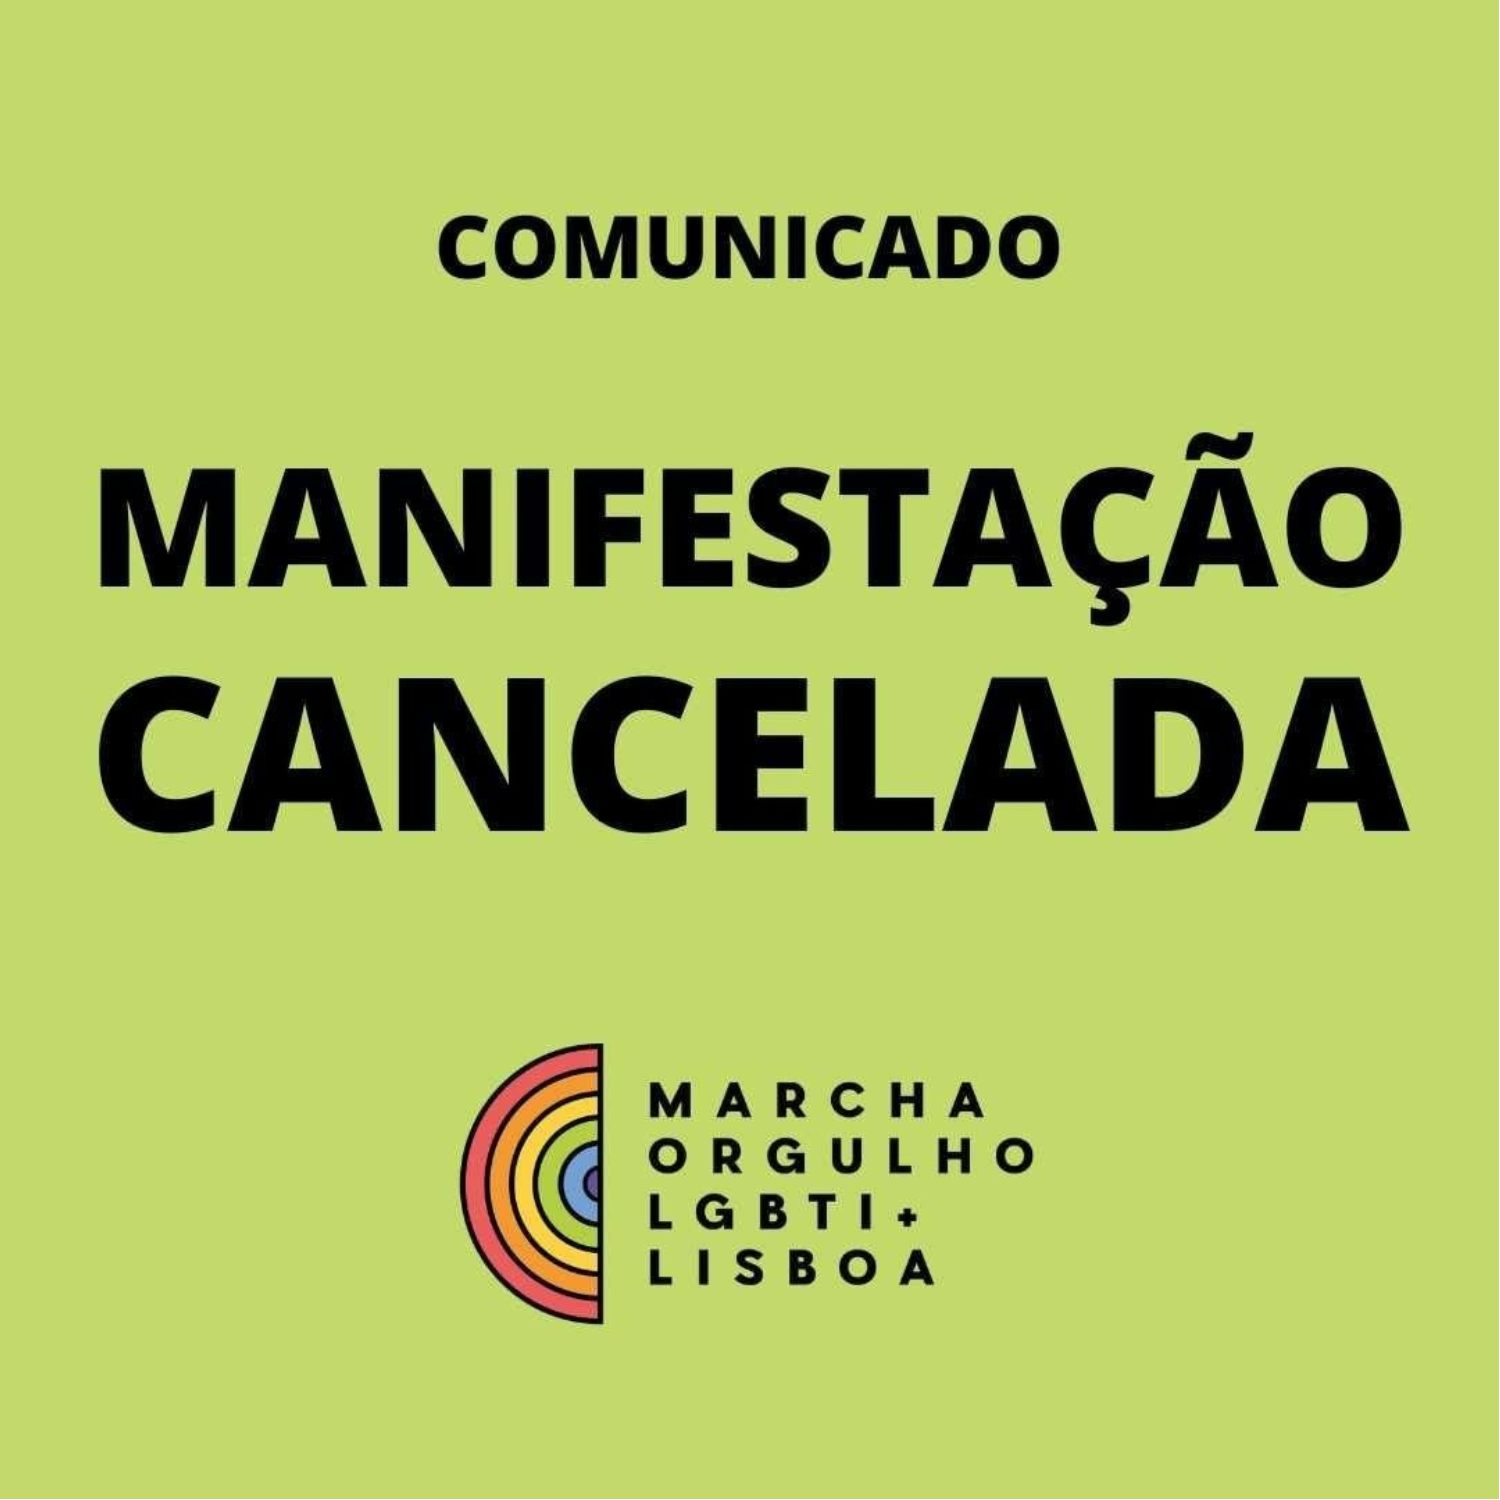 PORTUGAL: Marcha do Orgulho LGBT+ de Lisboa 2021 foi cancelada